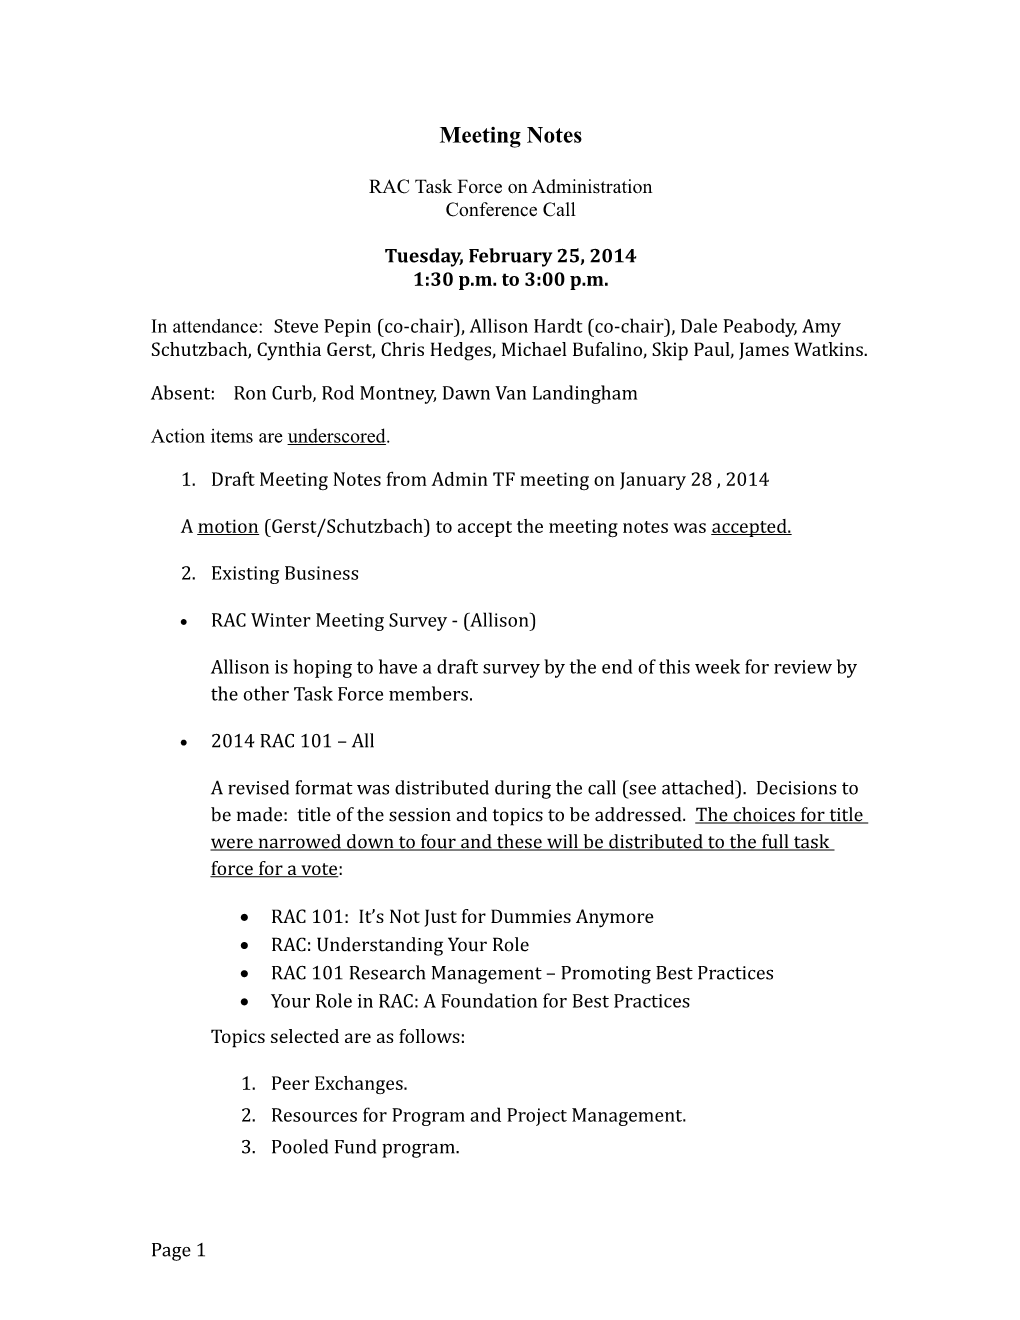 Admin TF Meeting Notes: February 25, 2014